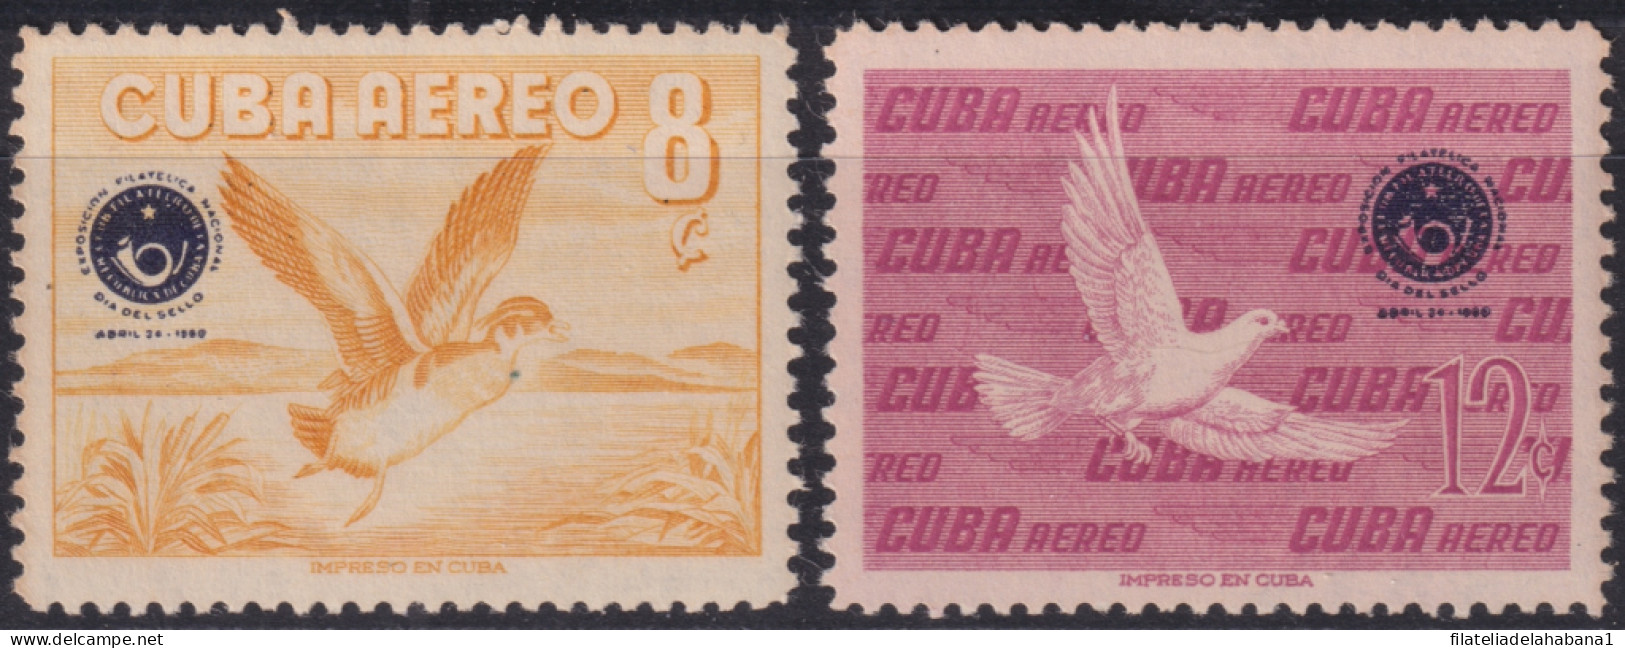 1960.382 CUBA 1960 MNH OVERPRINT PHILATELIC EXPO OVERPRINT BIRD PIGEON AVES.  - Poste Aérienne